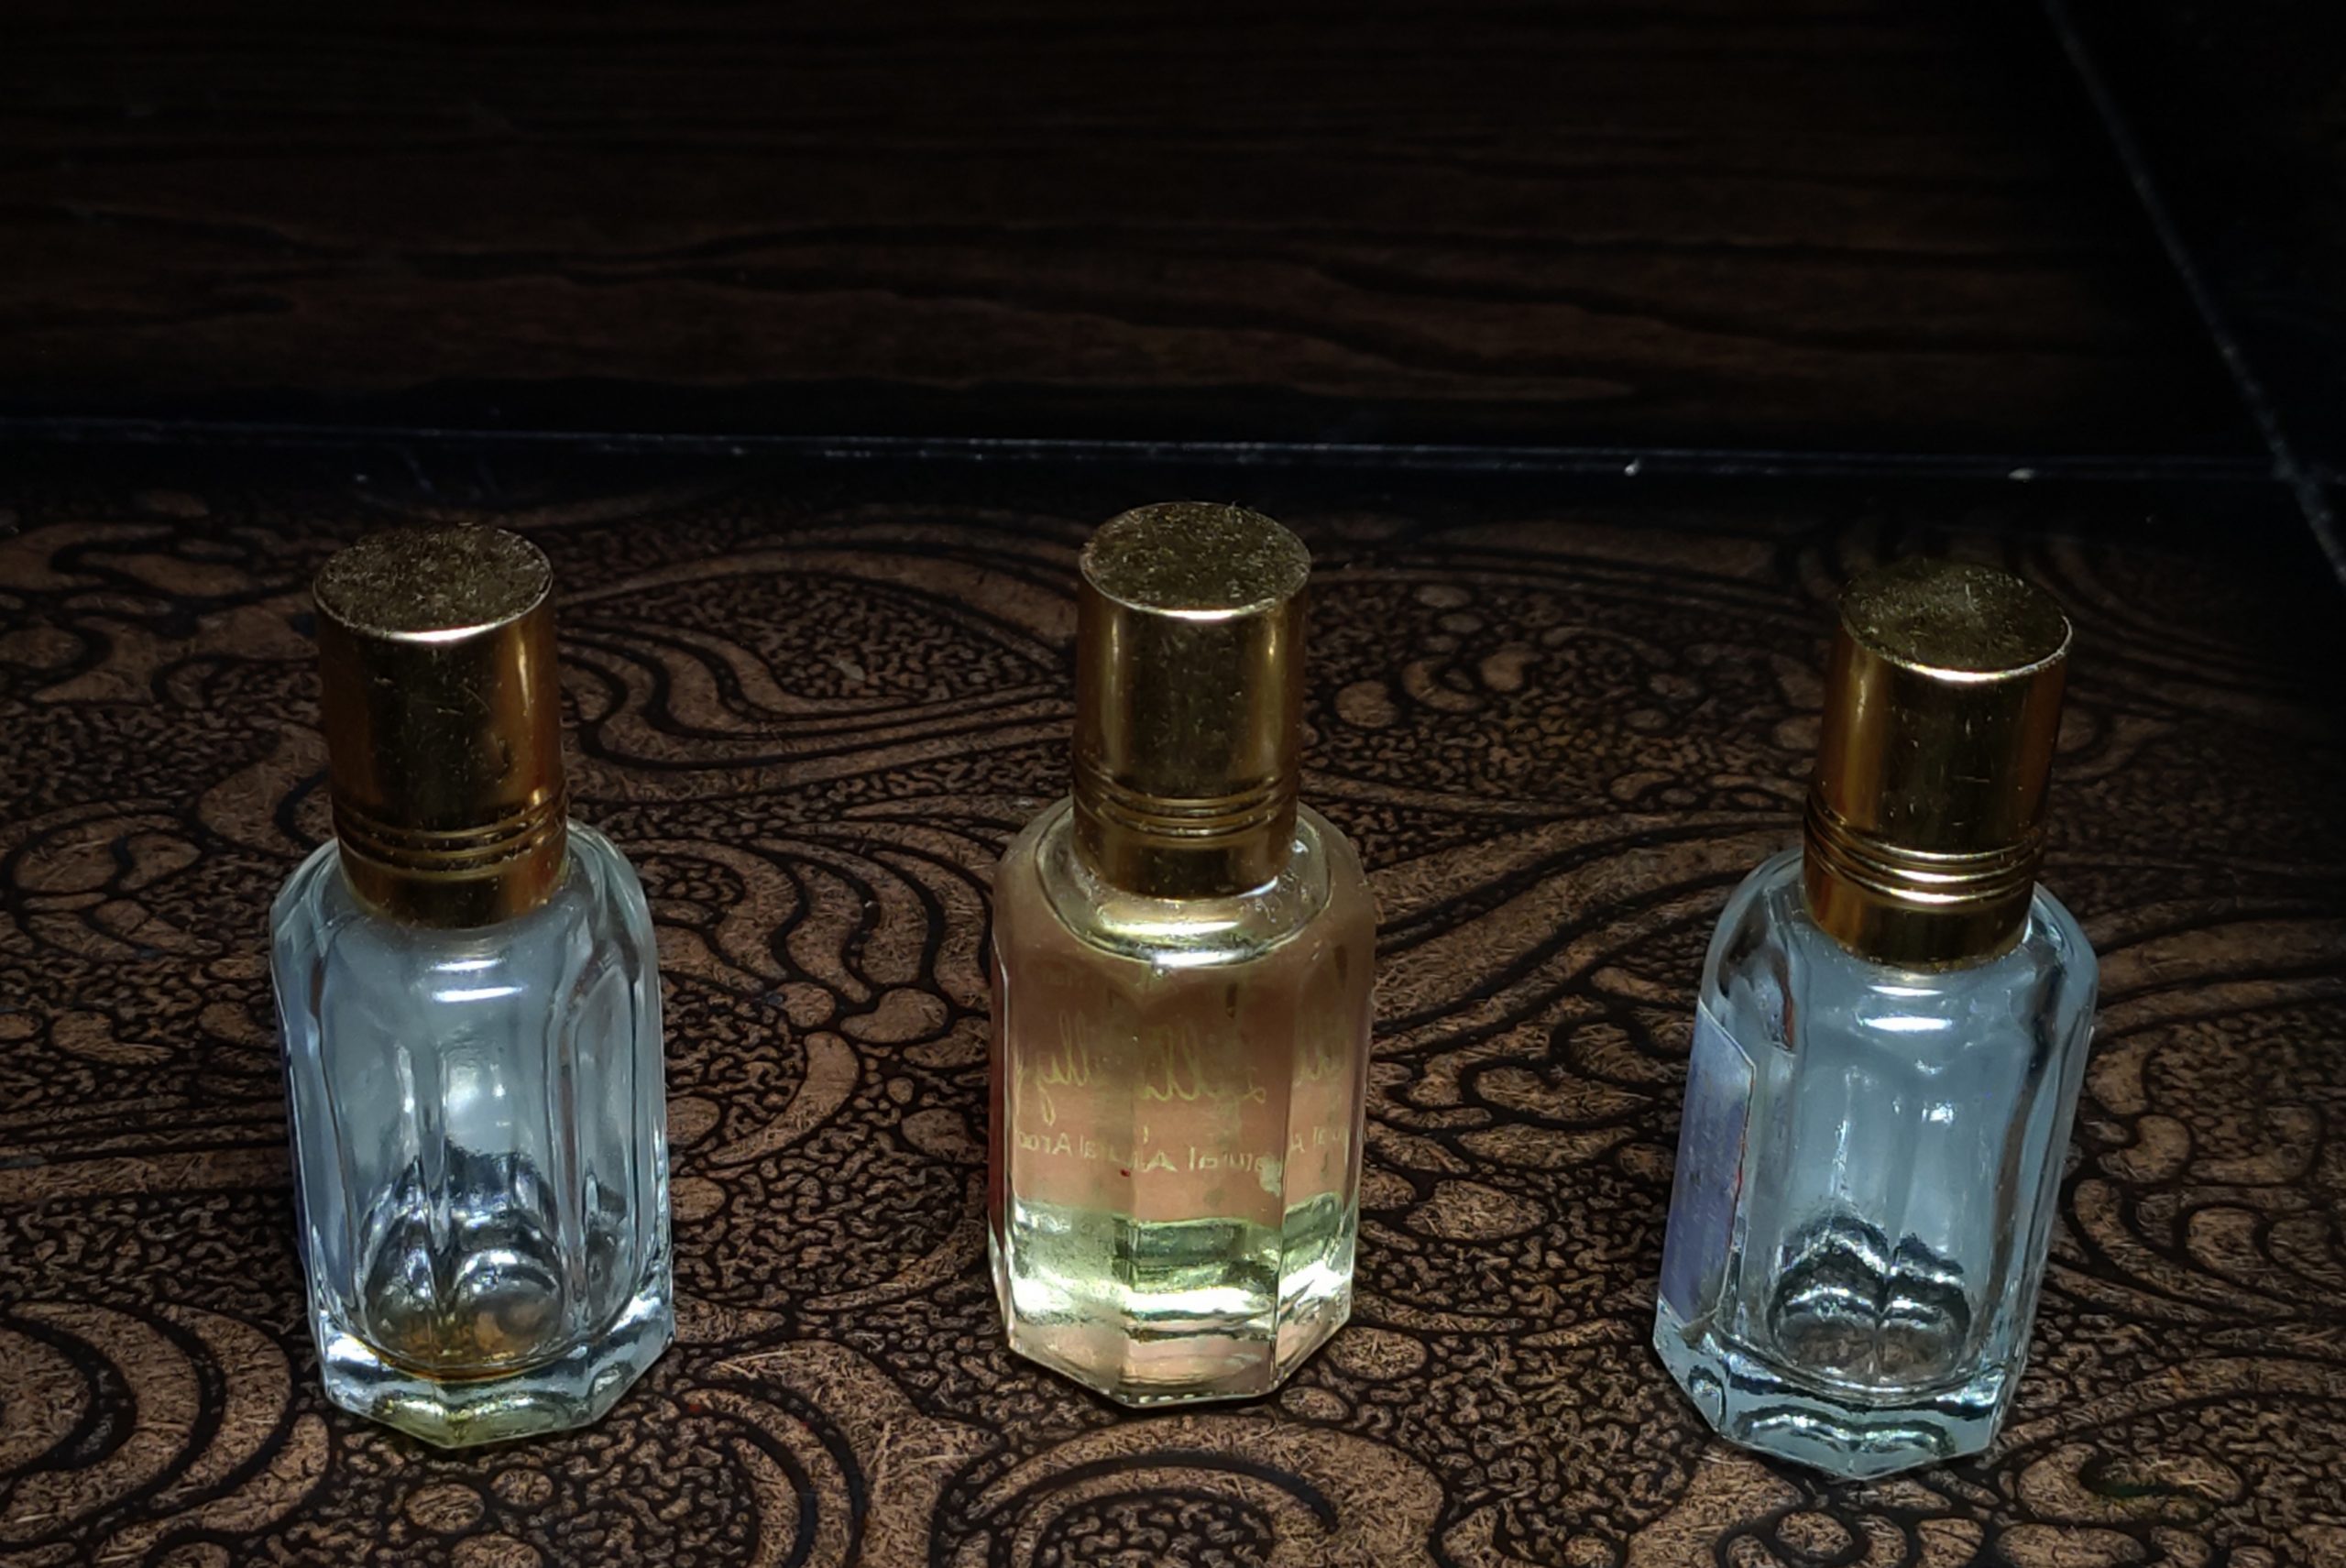 Three perfume bottles on a table